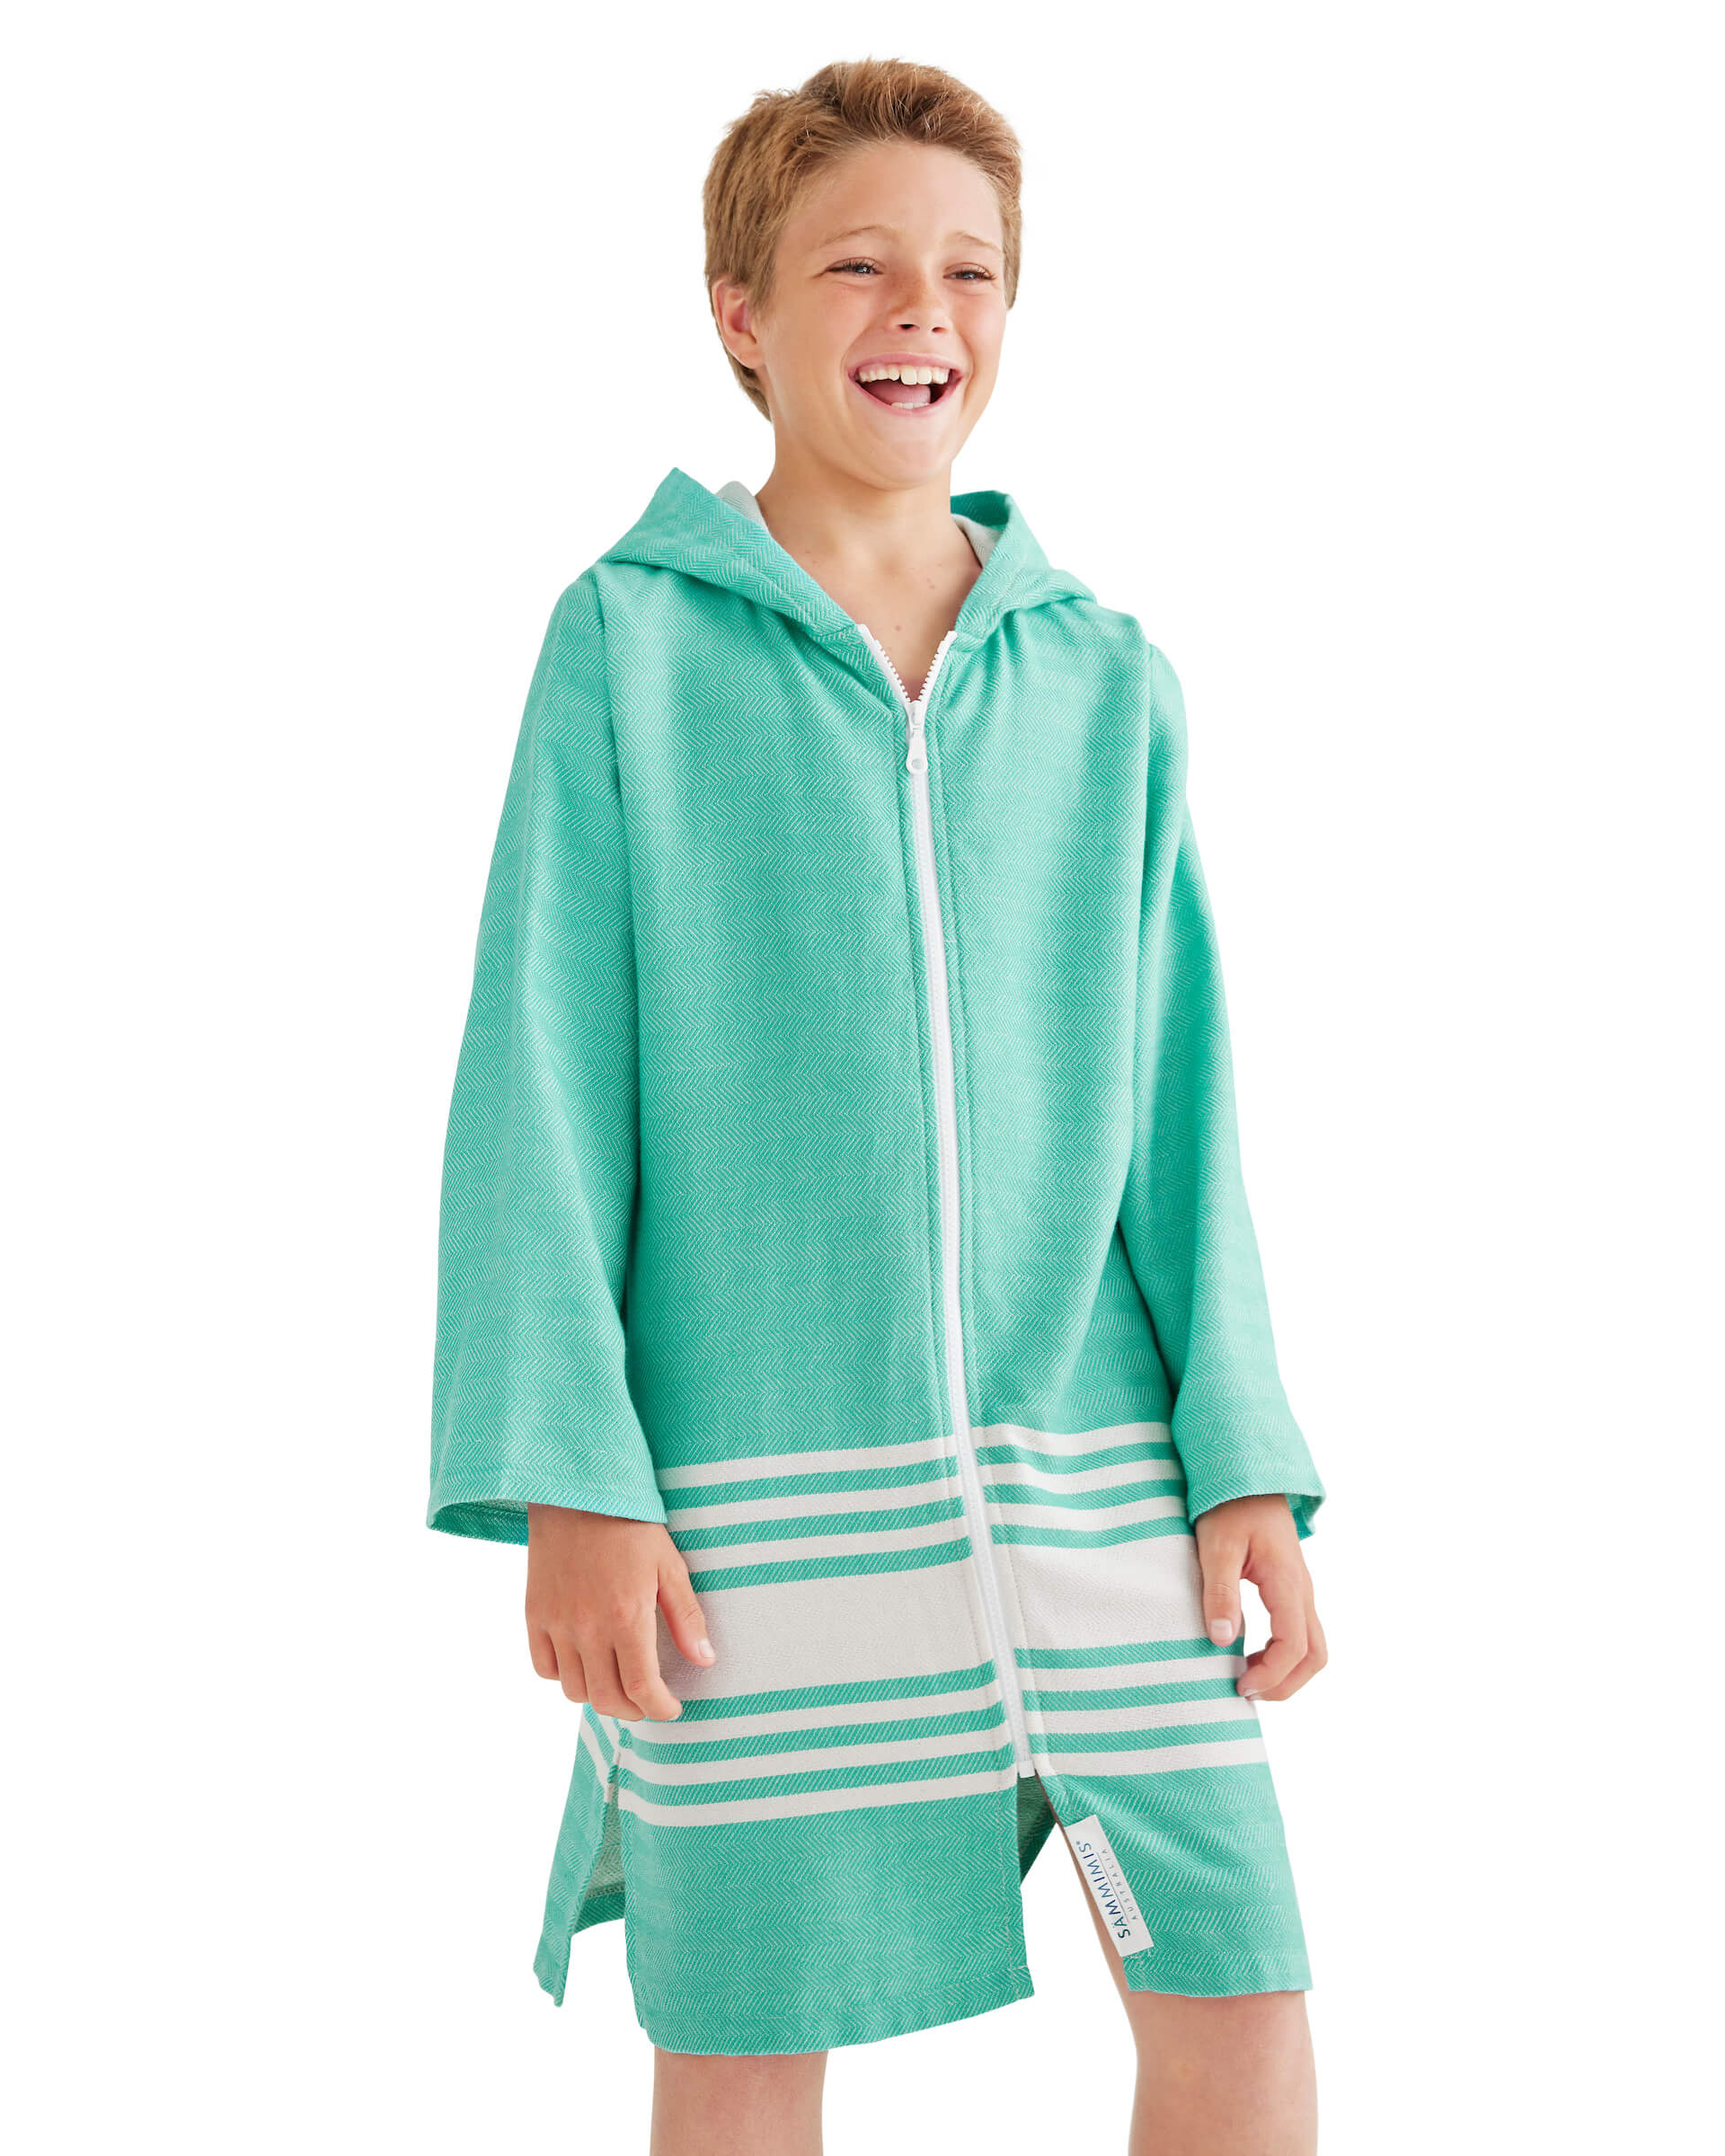 TASSOS Kids Hooded Towel: Sea Green/White